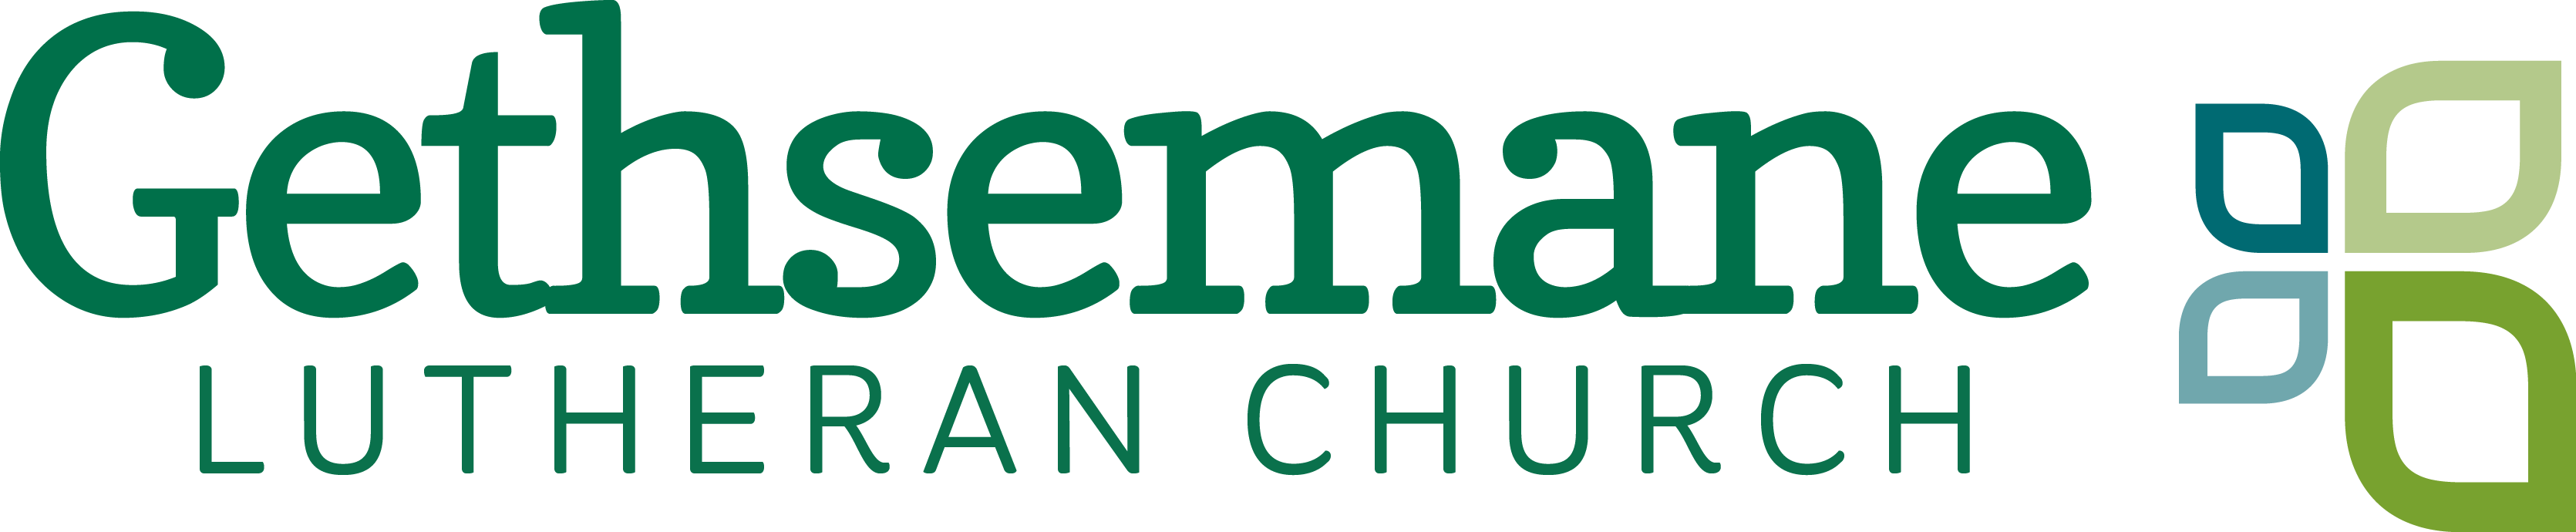 GethsemaneLutheranChurch-Logo